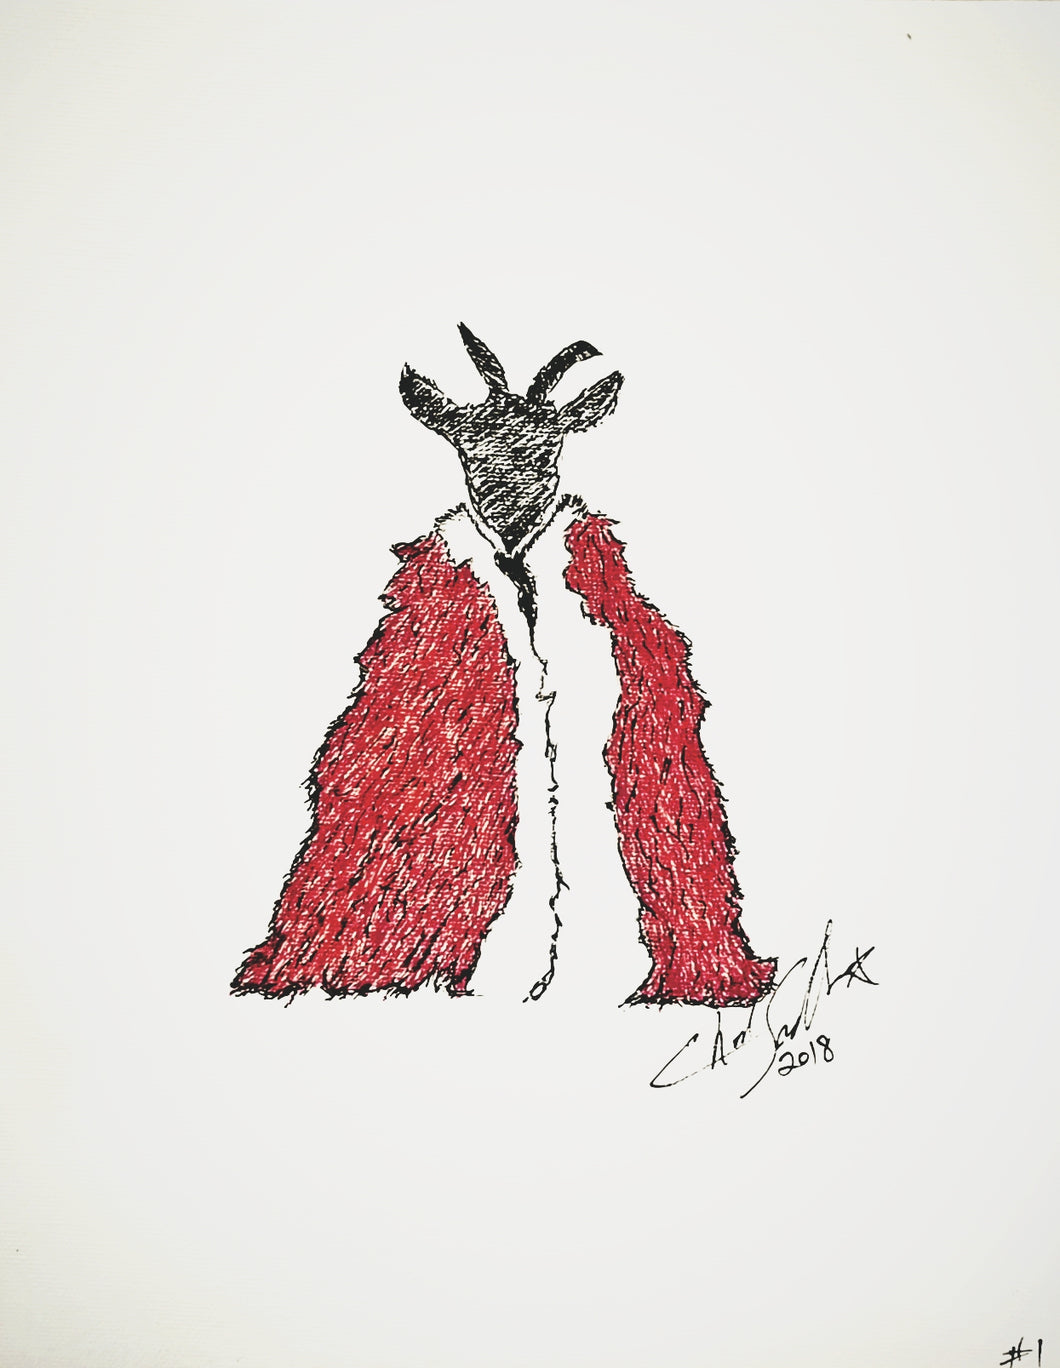 Yule Goat - Hand-Embellished Print, by Farmer Chad